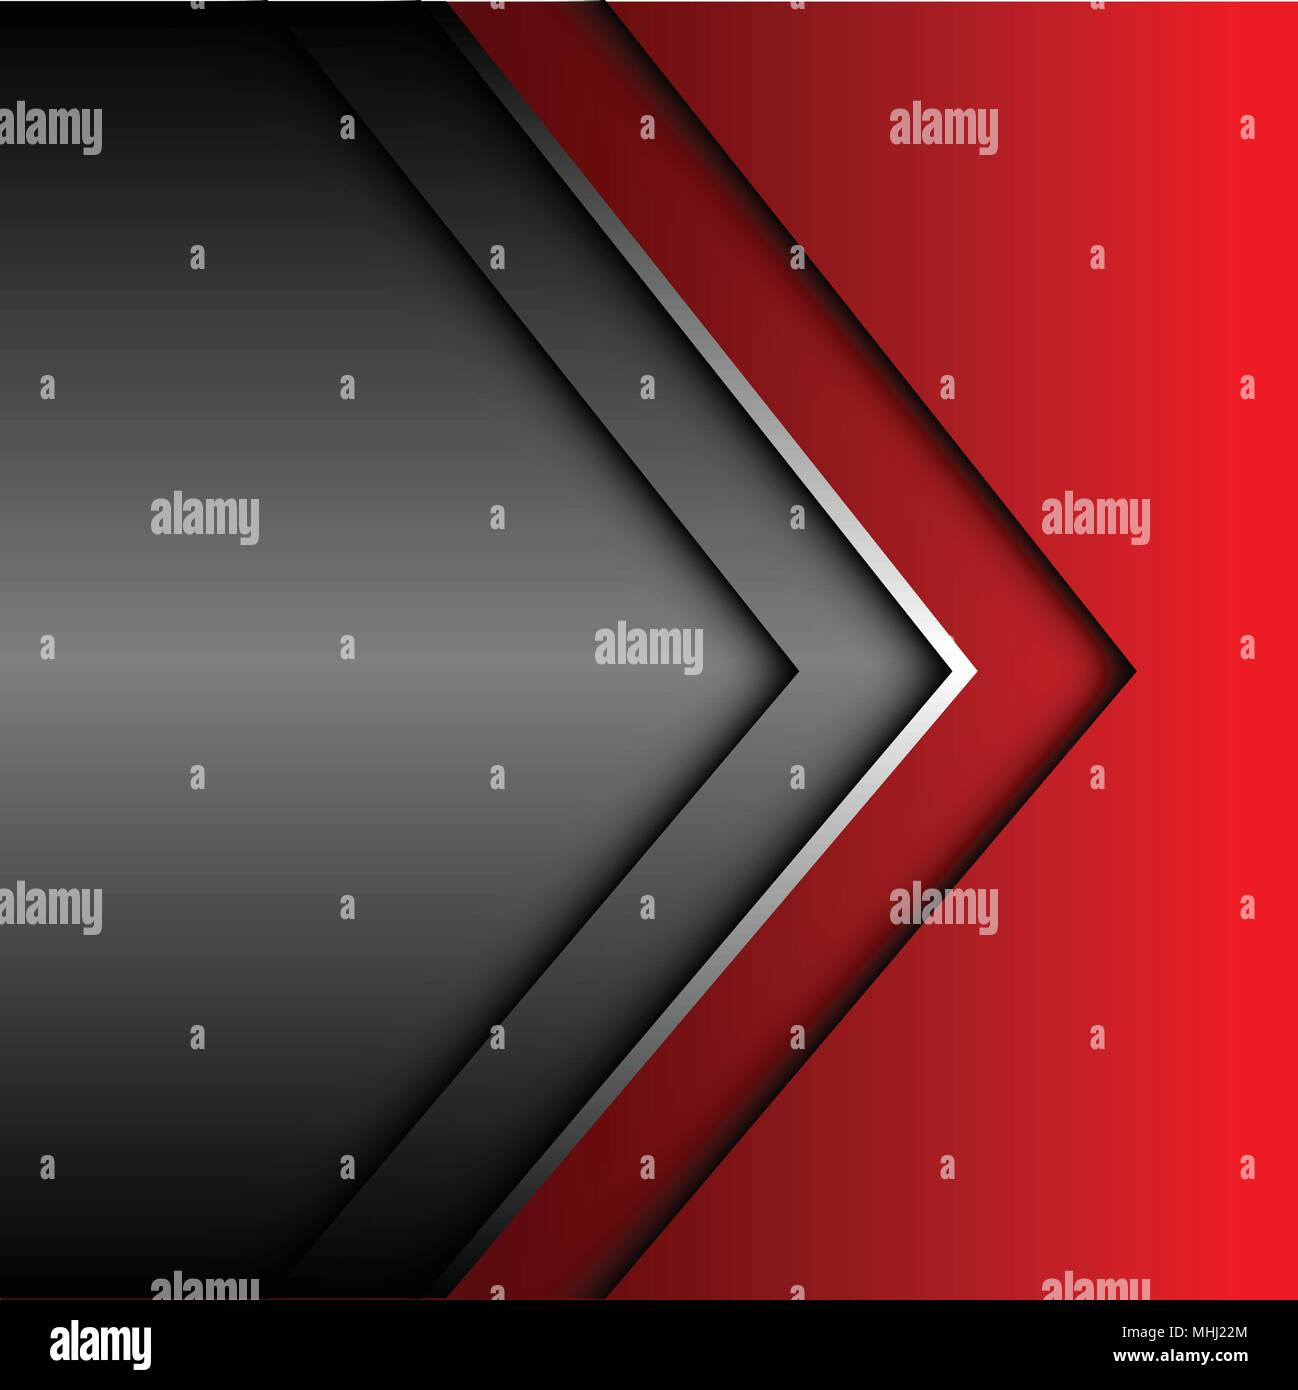 Abstract red silver gris flèche moderne design futuristic background vector illustration. Illustration de Vecteur